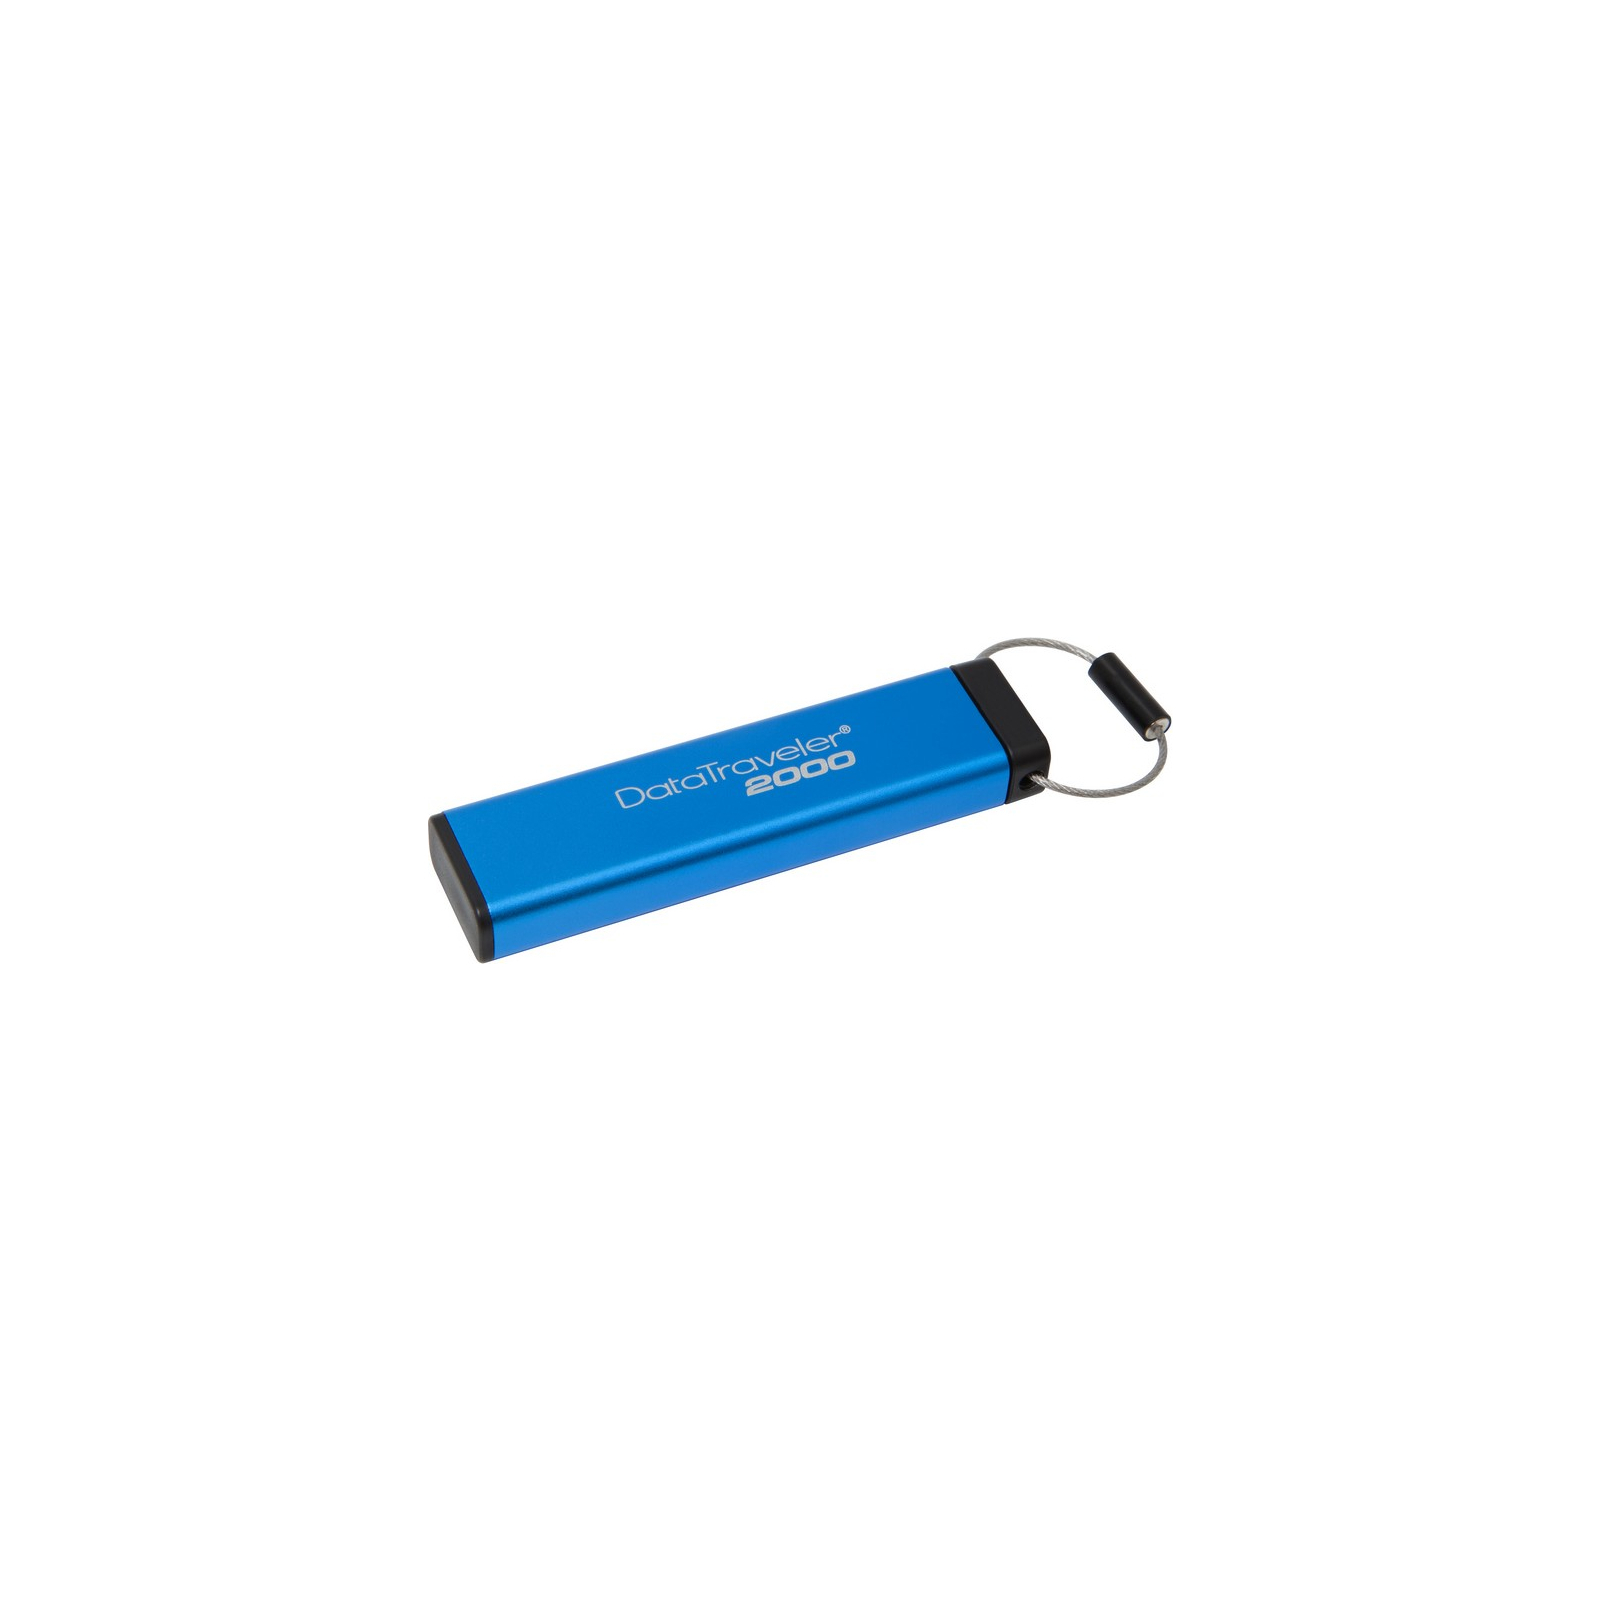 USB флеш накопитель Kingston 64GB DT 2000 Metal Security USB 3.0 (DT2000/64GB) изображение 2